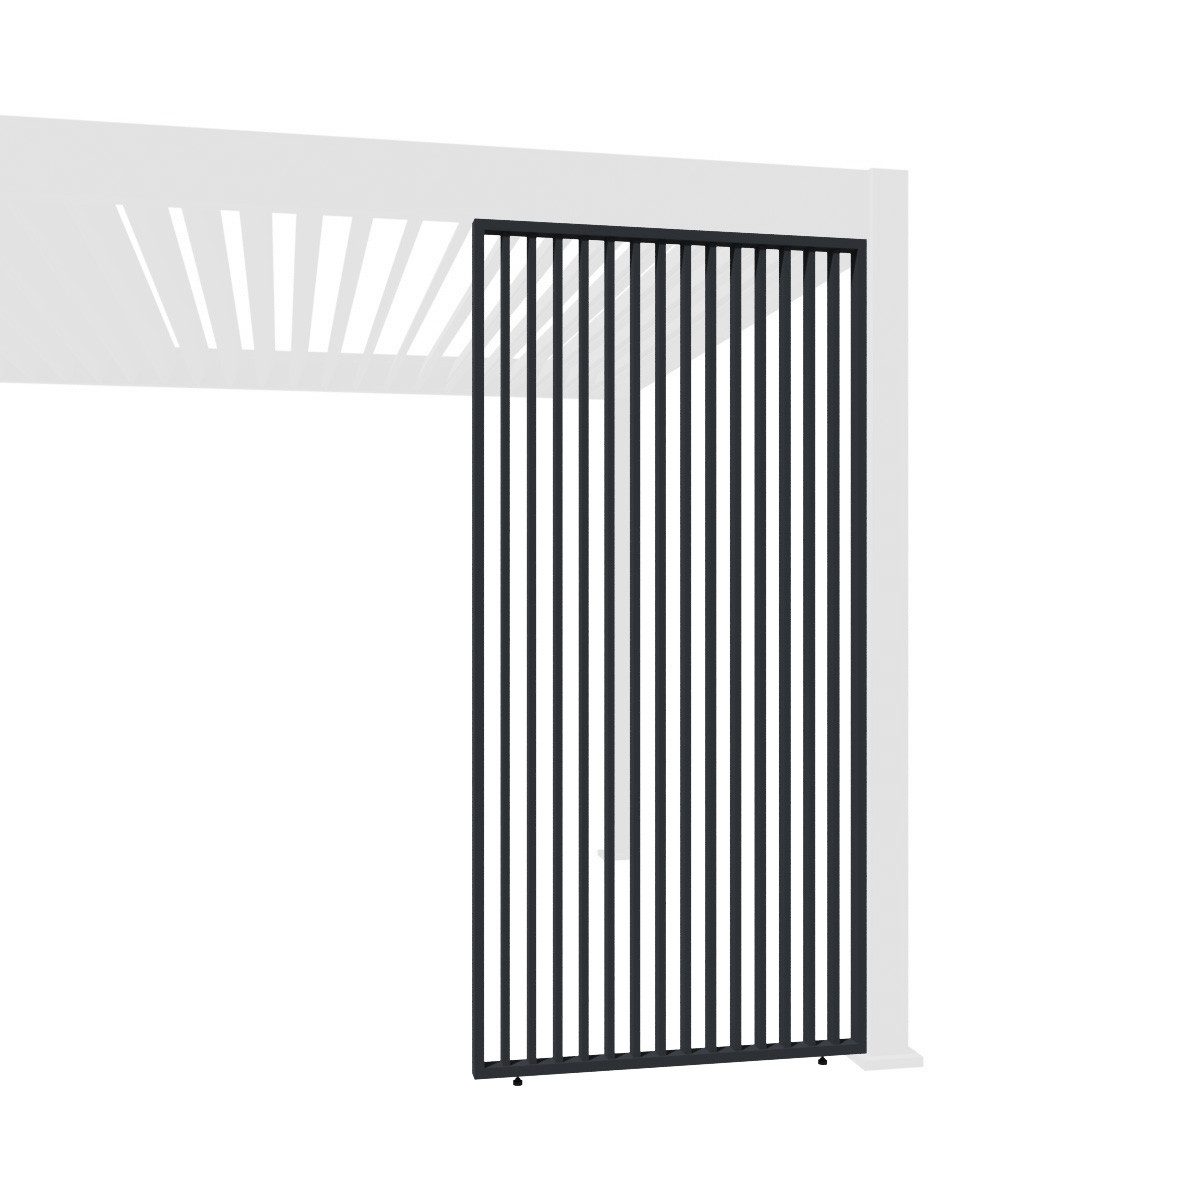 Weide Pavillonseitenteil Vertikale Lamellenwand für Pergola aus Aluminium 3 Maße Grau